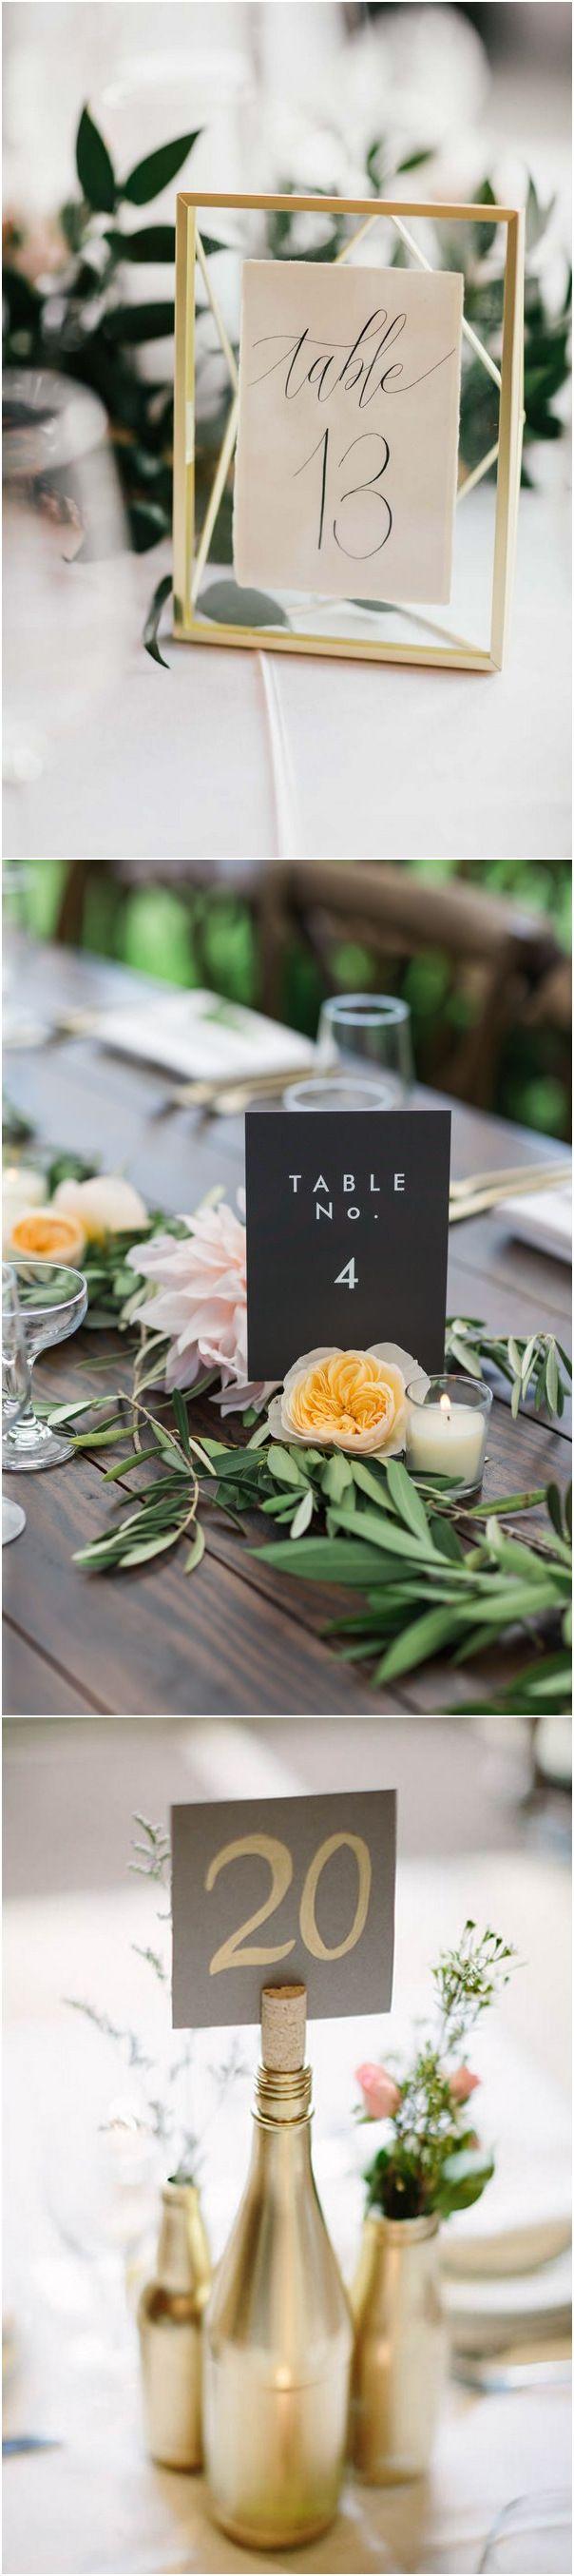 زفاف - 18 Inspiring Wedding Table Number Ideas To Love - Page 3 Of 3